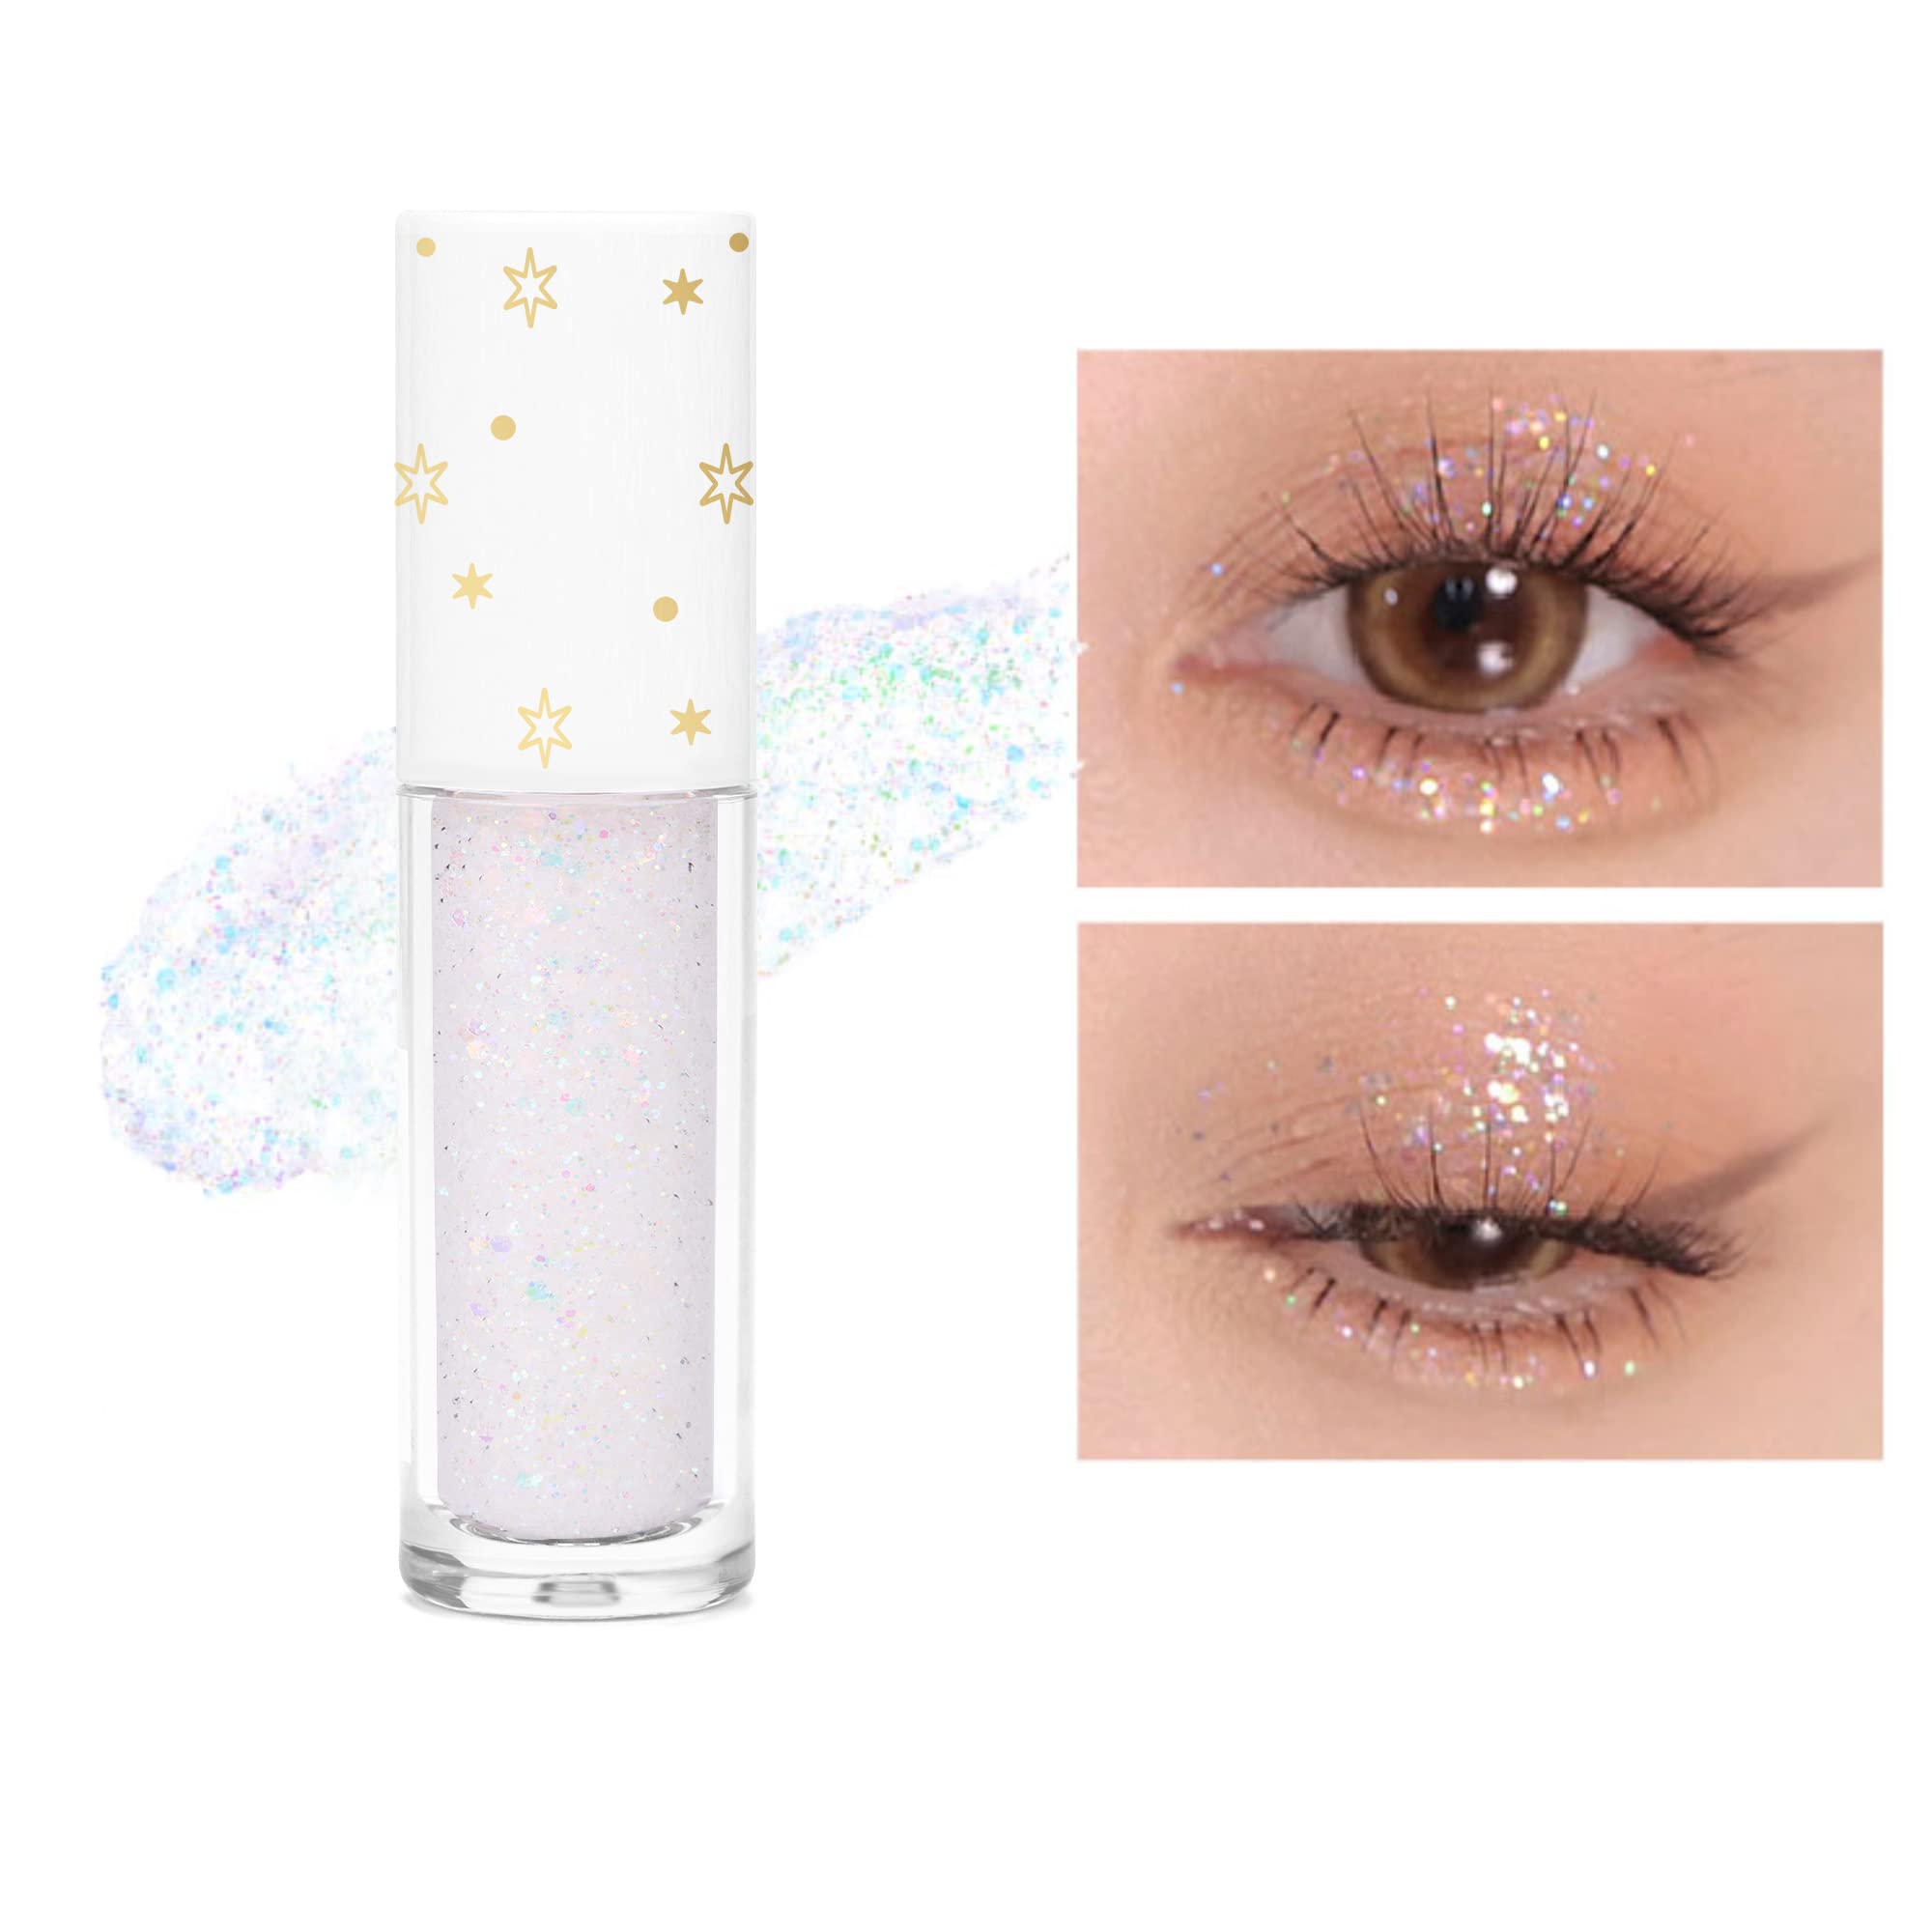 Geeneiya Liquid Glitter Eyeshadow Korean Makeup Under Eye Shadow  Bling,Pigmented, Long Lasting, Quick Drying, Loose Glitter Glue for  Crystals EyeMakeup (Colorful Galaxy 01) Transparent Galaxy 01